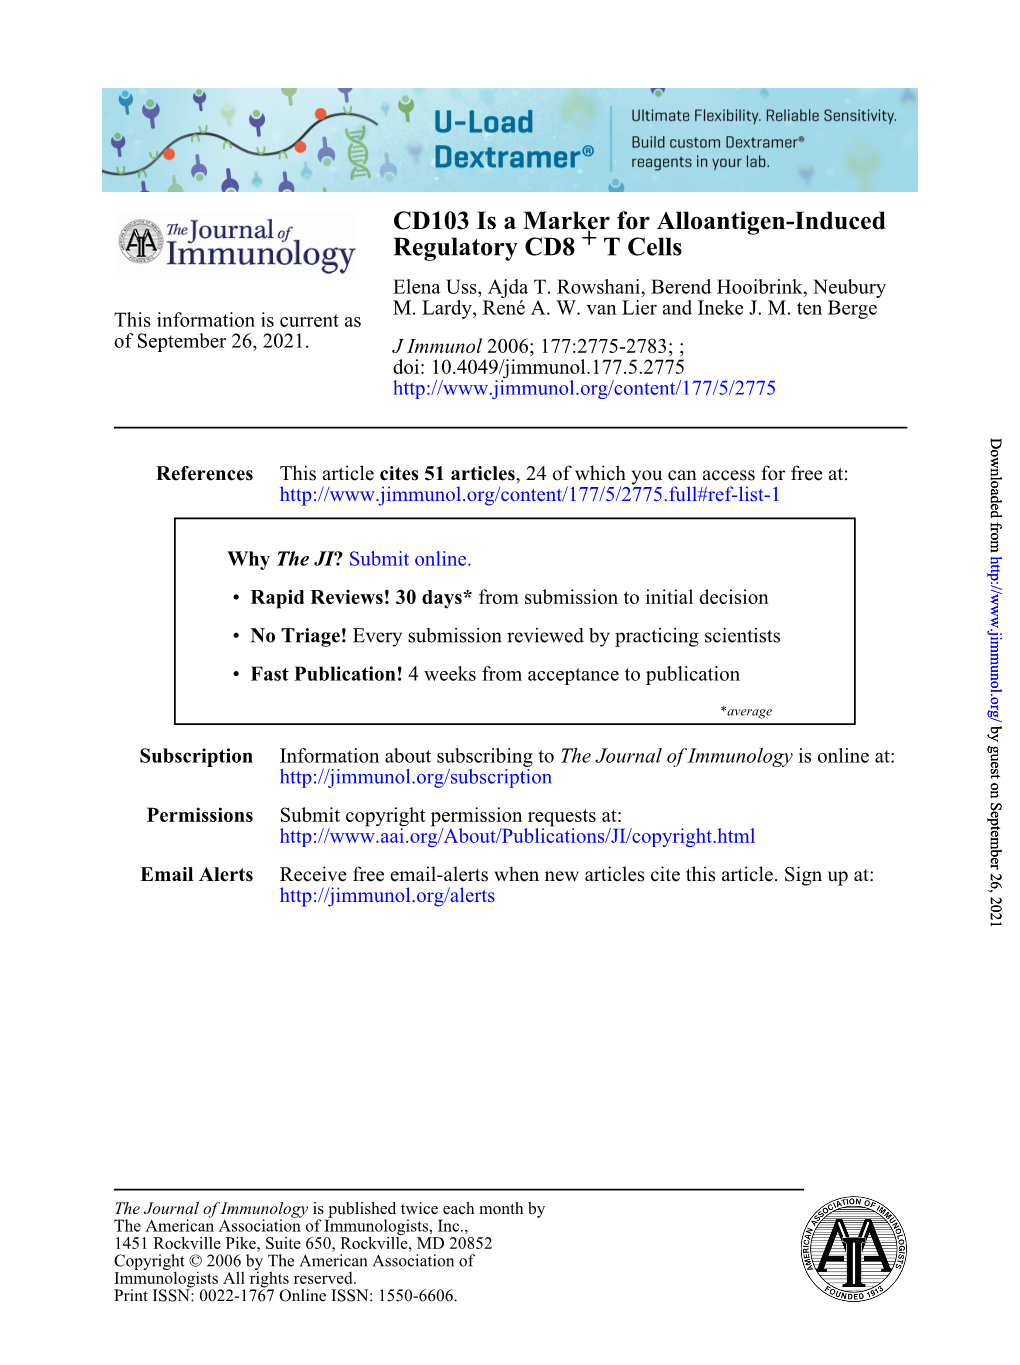 T Cells + Regulatory CD8 CD103 Is a Marker for Alloantigen-Induced